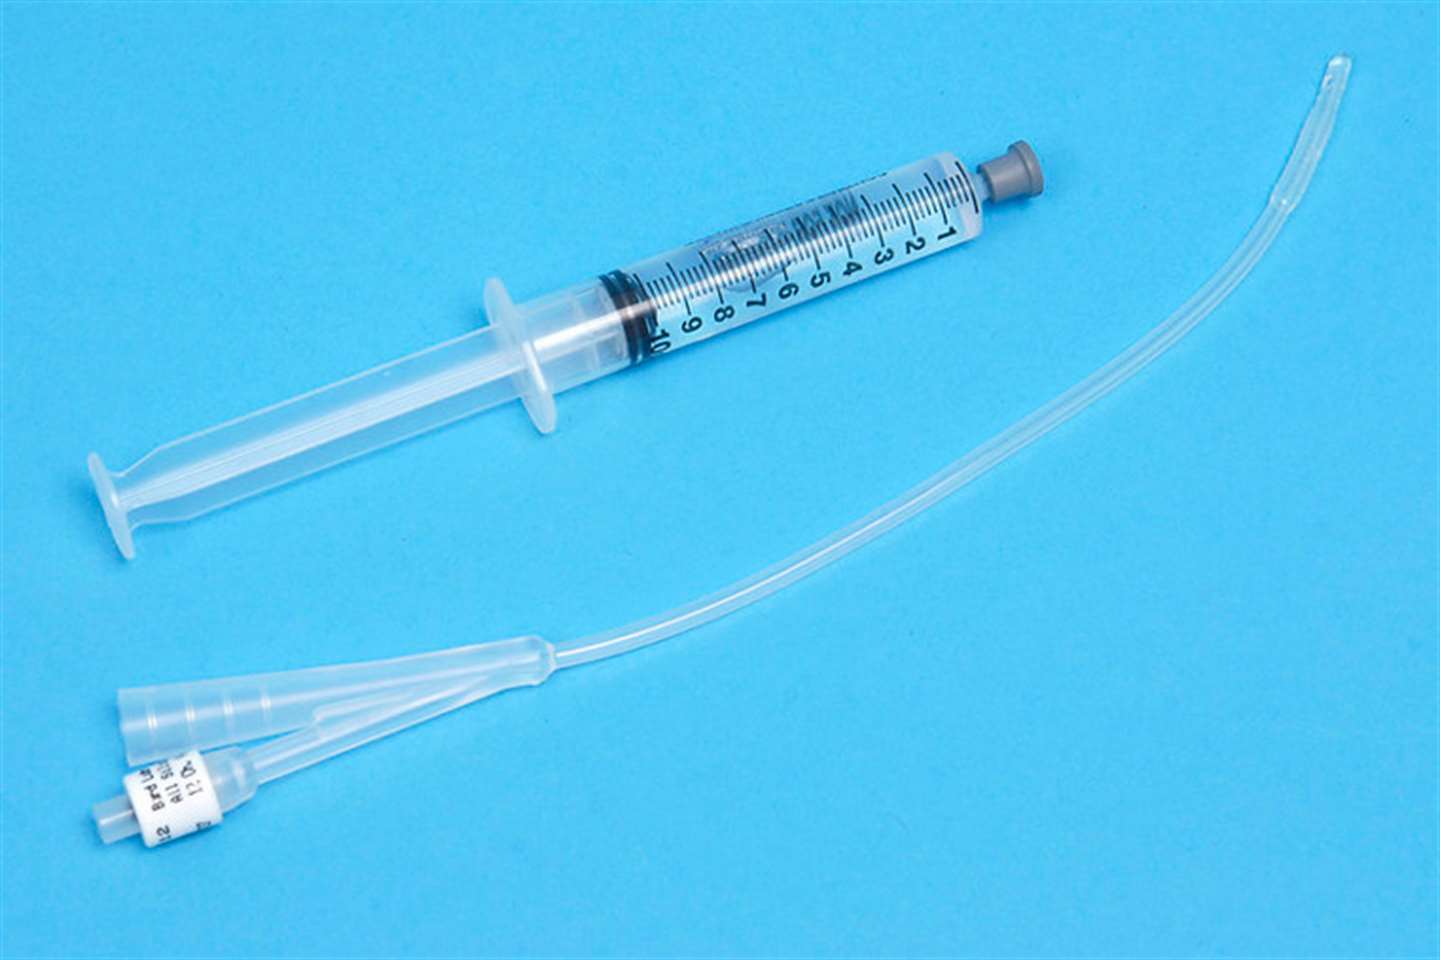 Silicone Foley indwelling catheter with lignocaine (in syringe) for insertion